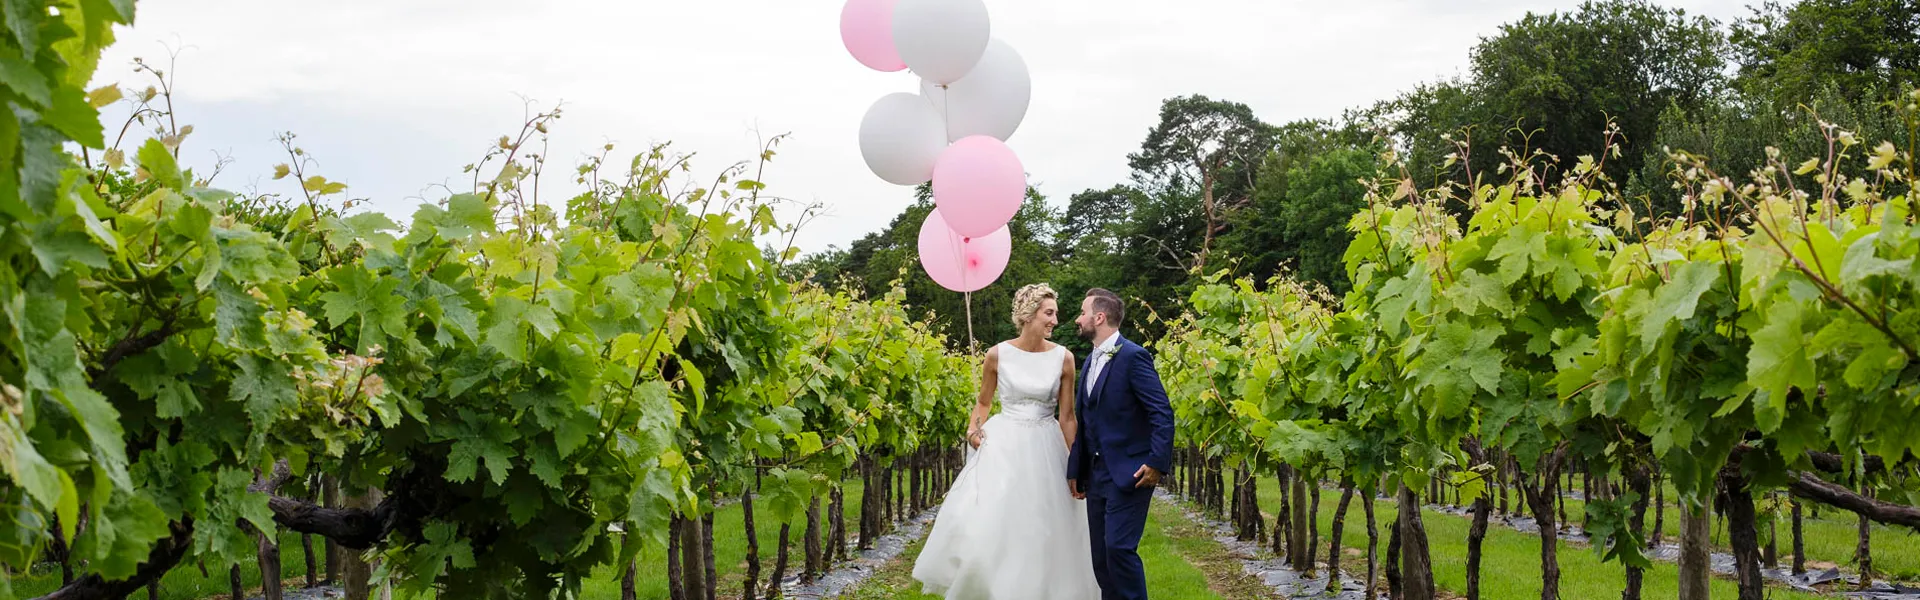 Wedding Photographer Llanerch Vineyard Balloons Quirky